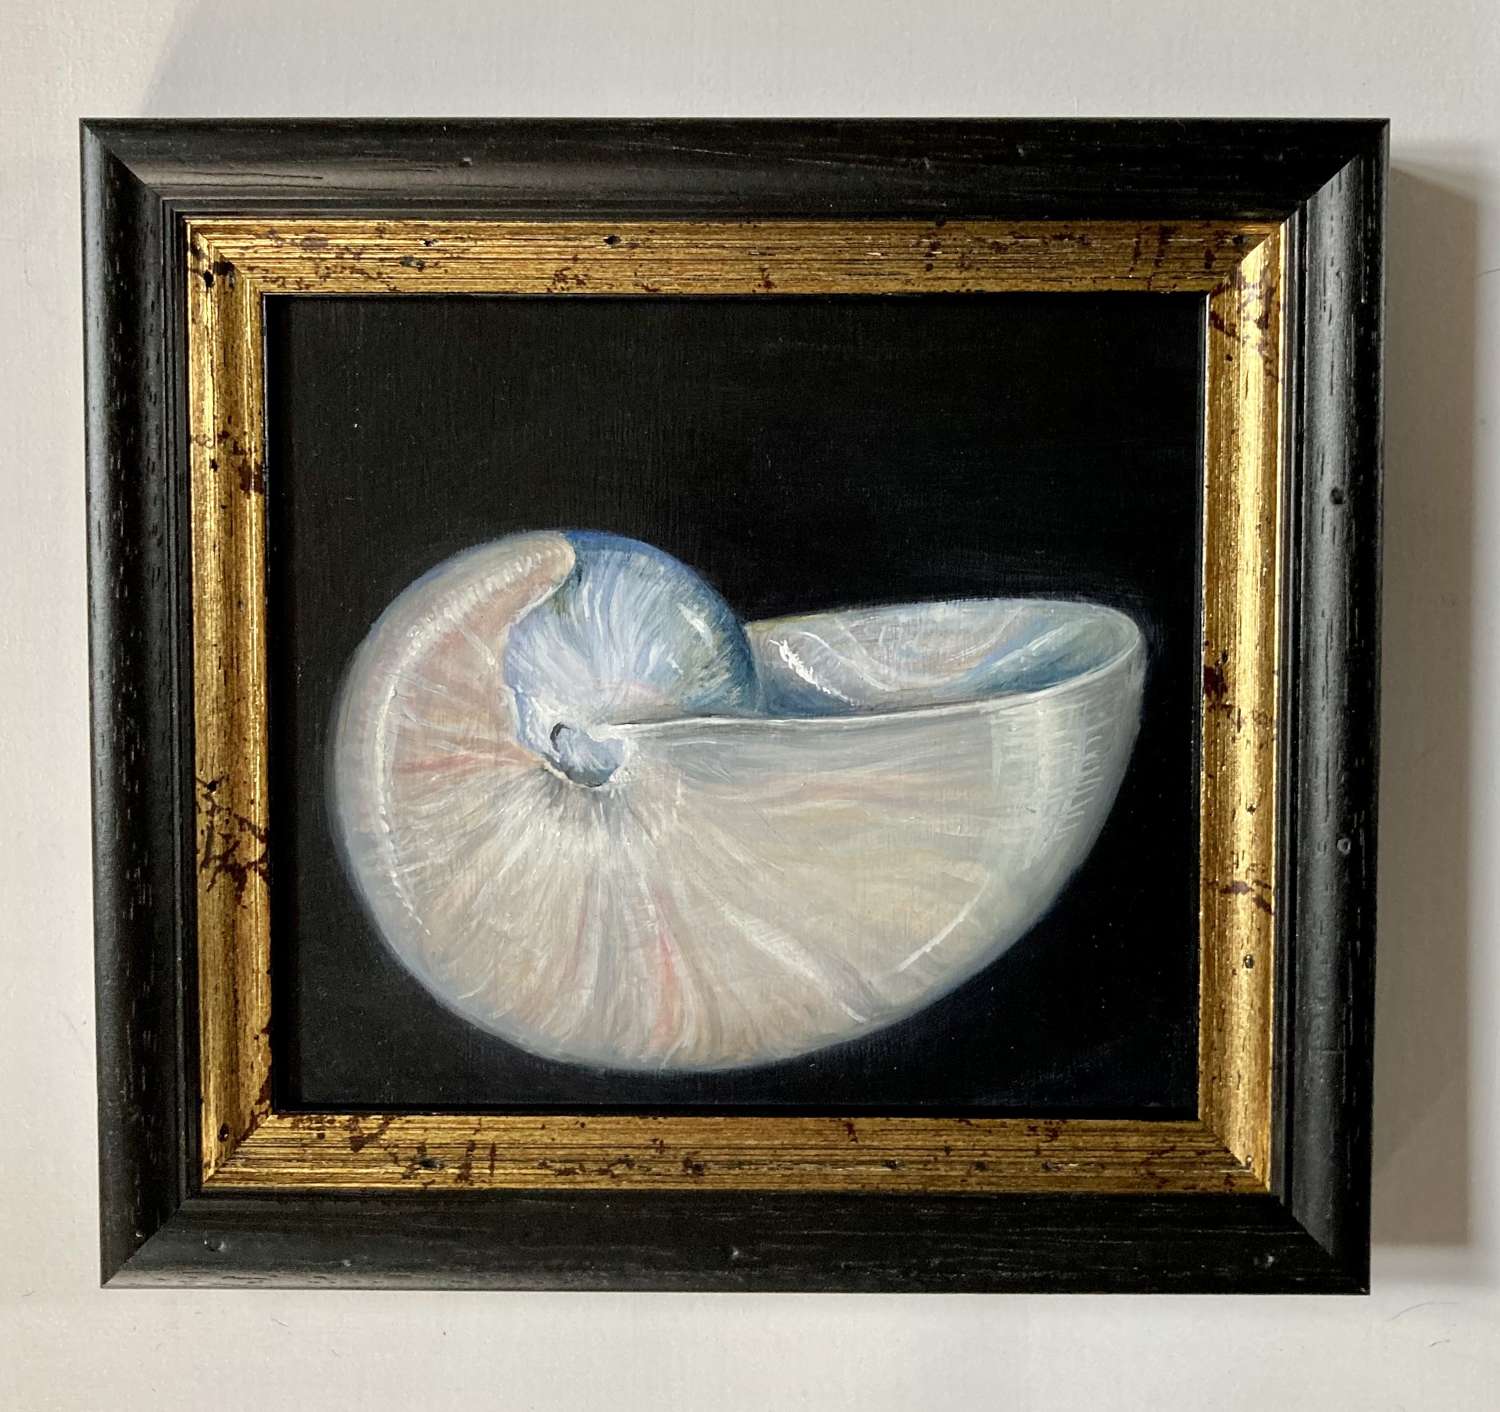 Nautilus shell